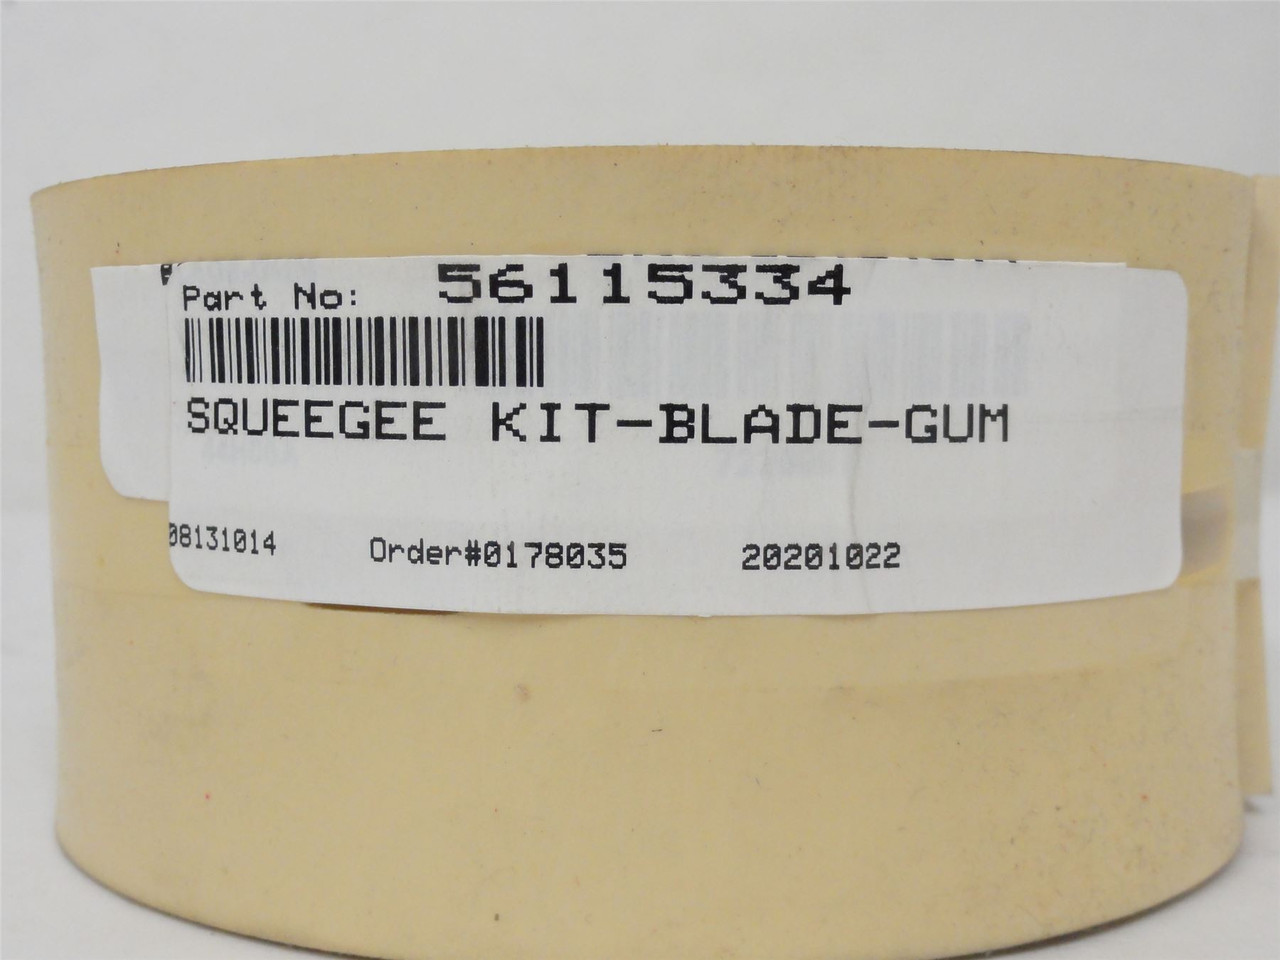 Nilfisk Advance 56115334; Squeegee Kit; Blade-Gum